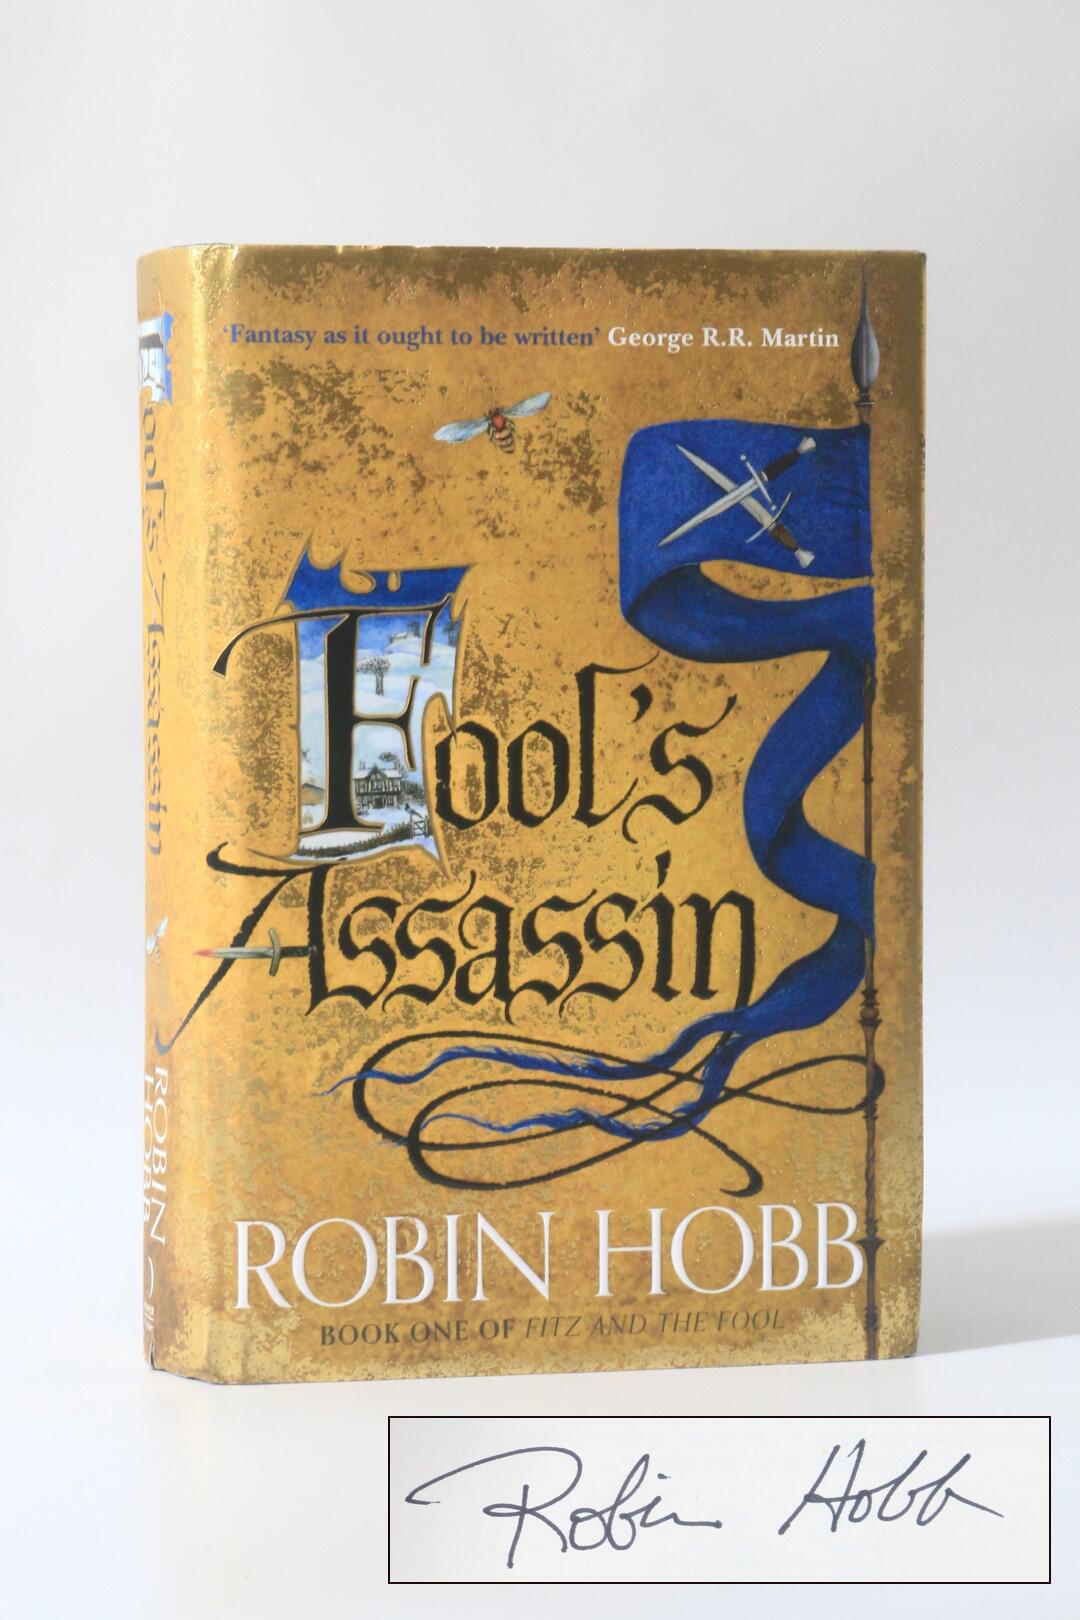 Robin Hobb - Fool's Assassin - Harper Voyager, 2014, Signed First Edition.